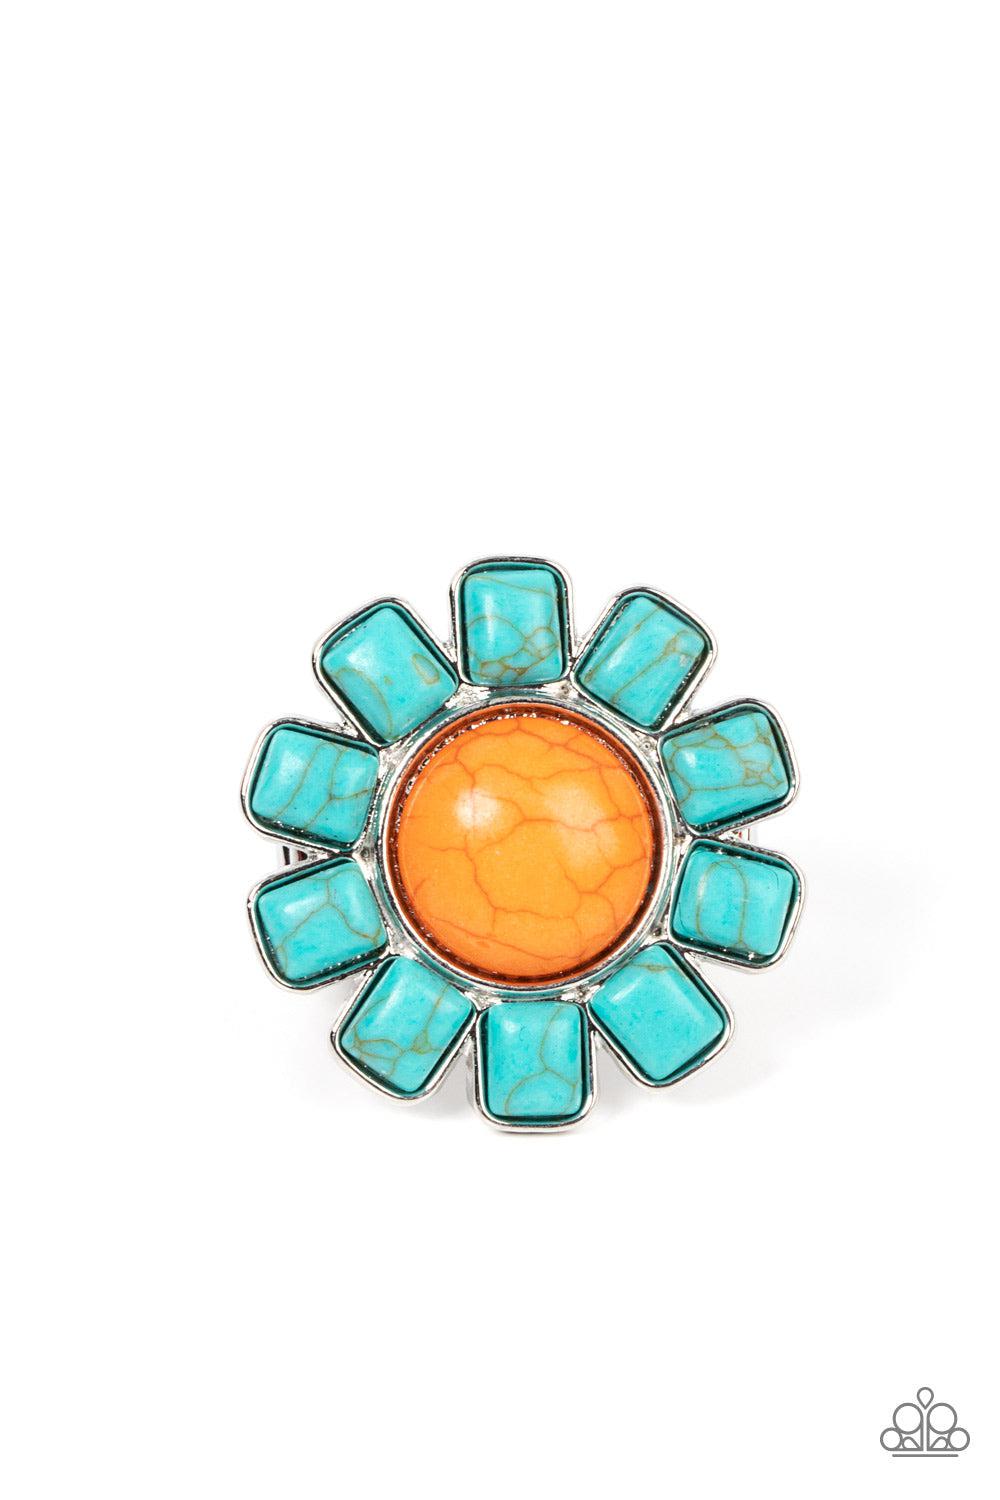 Mojave Marigold Orange & Turquoise Blue Stone Ring - Paparazzi Accessories- lightbox - CarasShop.com - $5 Jewelry by Cara Jewels